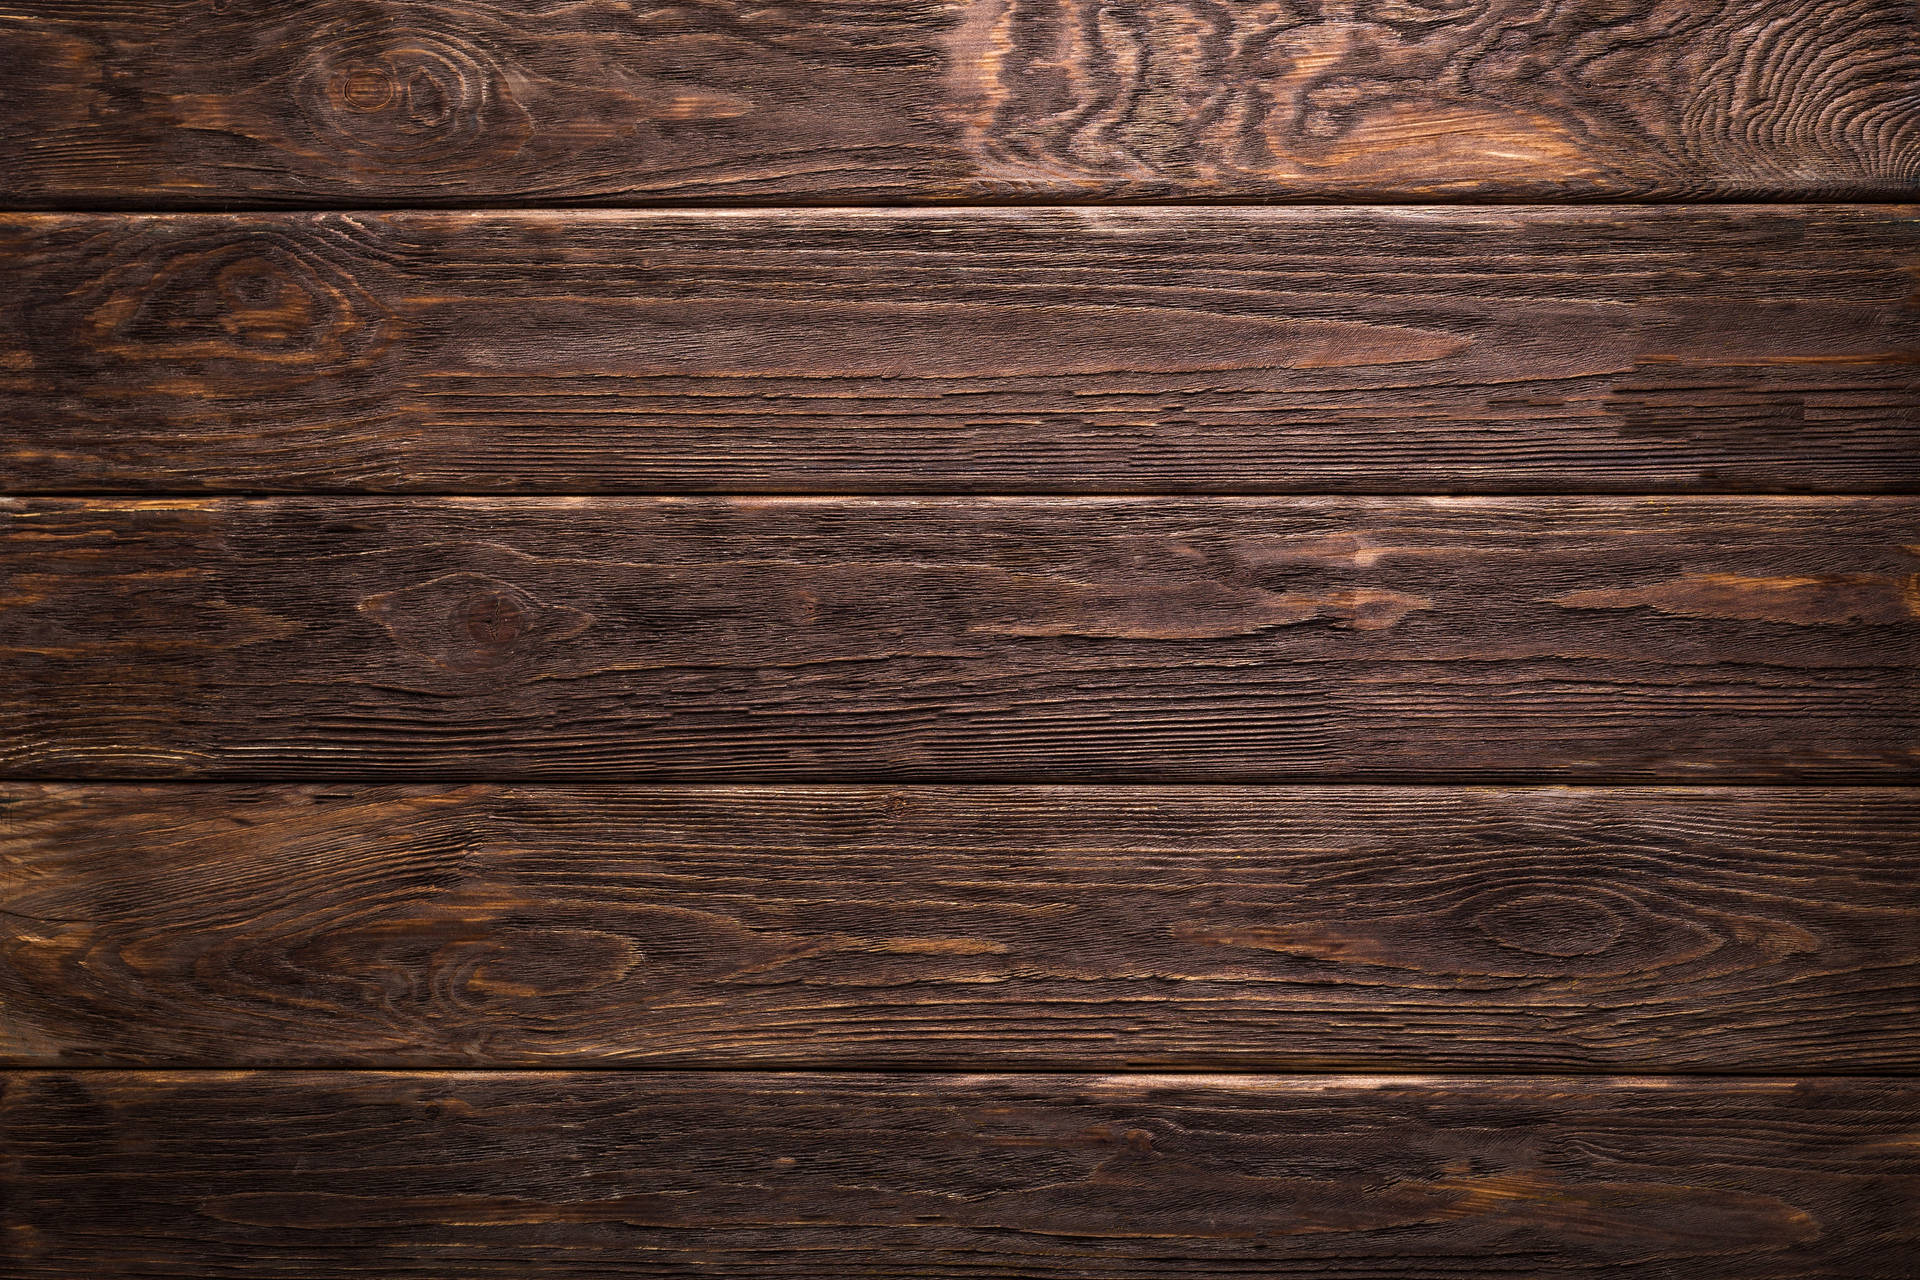 Textured Wood